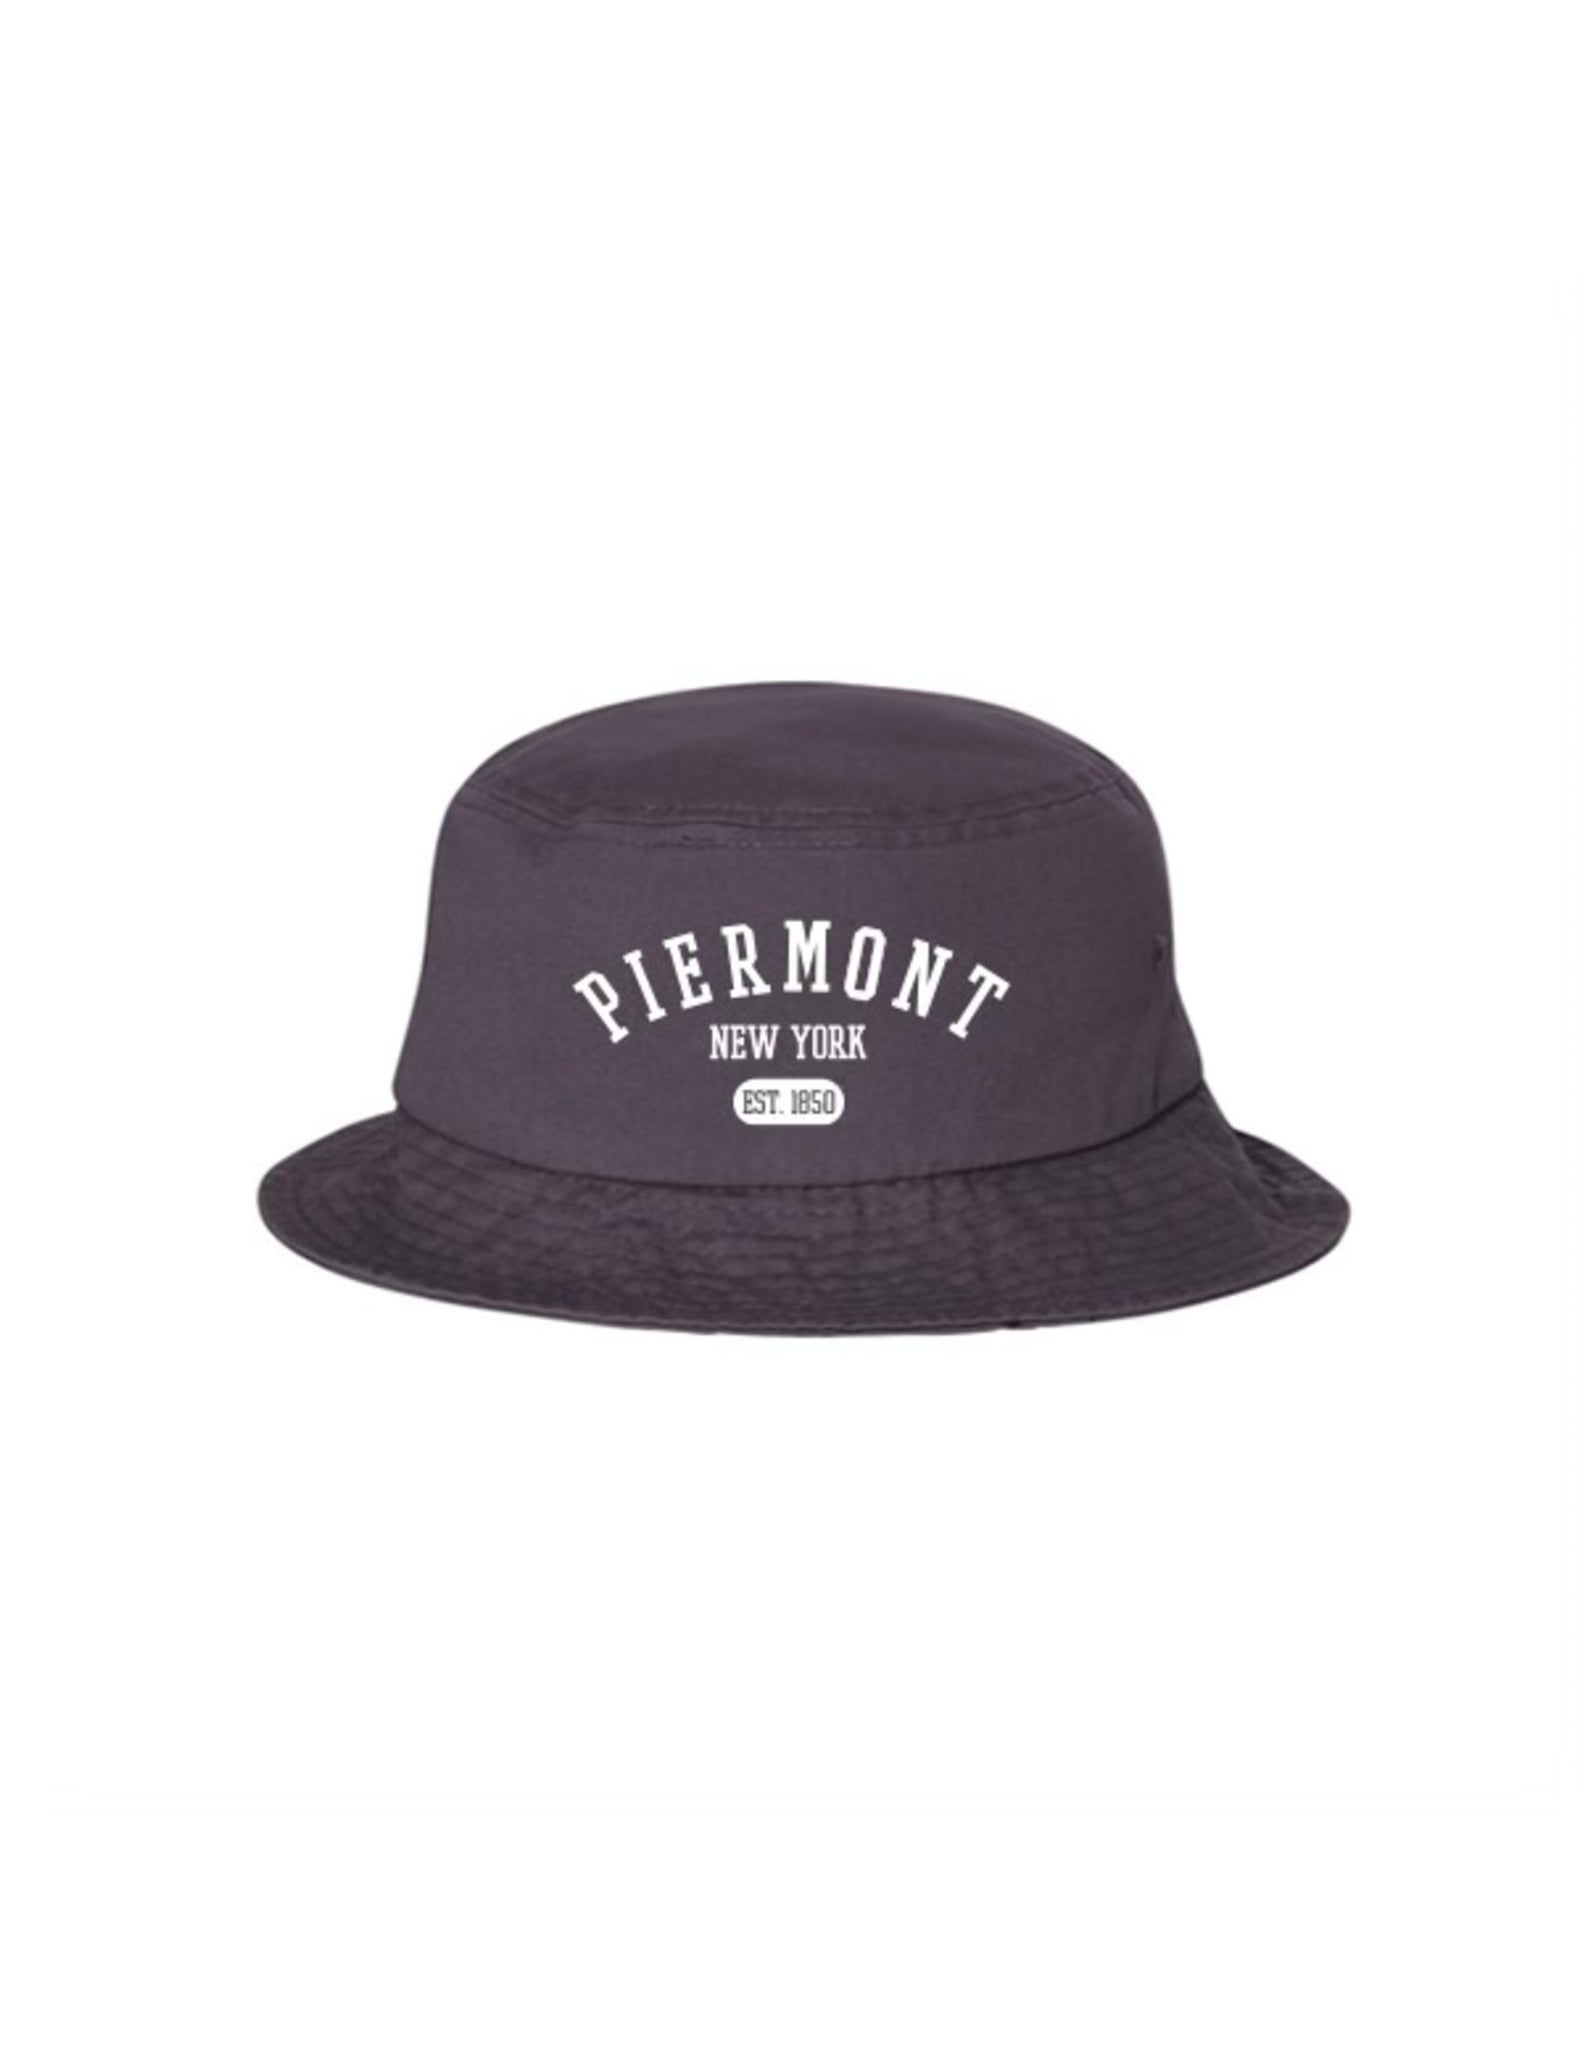 PIERMONT BUCKET HAT - CHARCOAL